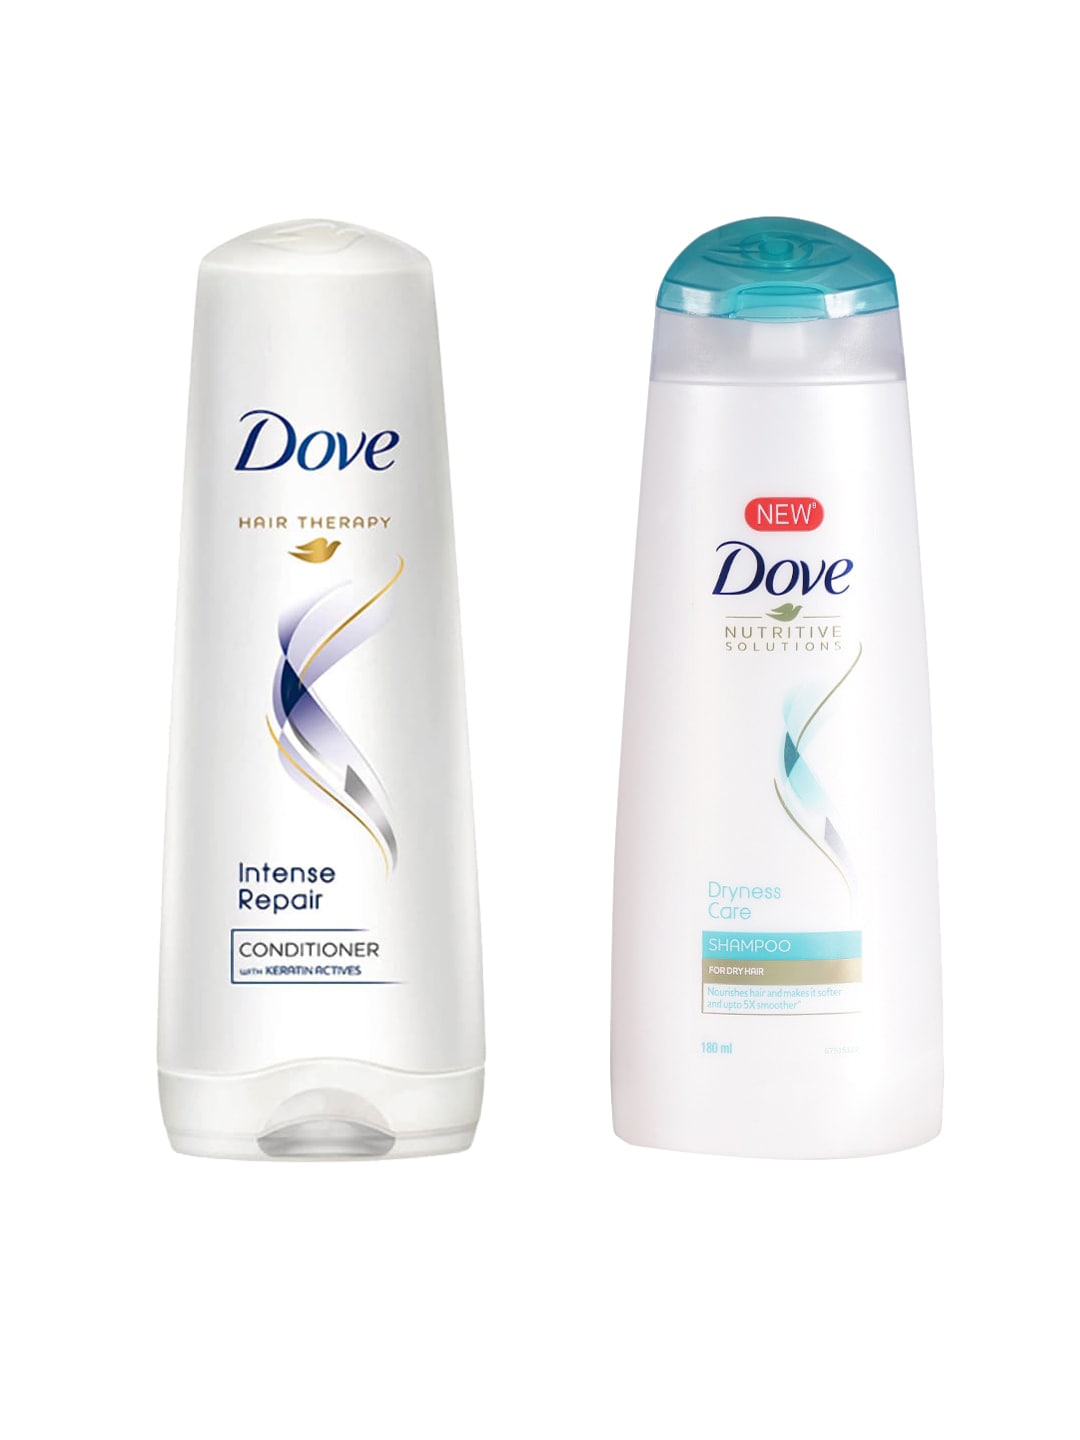 Dove Unisex Intense Repair Conditioner & Nutritive Solutions Dryness Care Shampoo Price in India